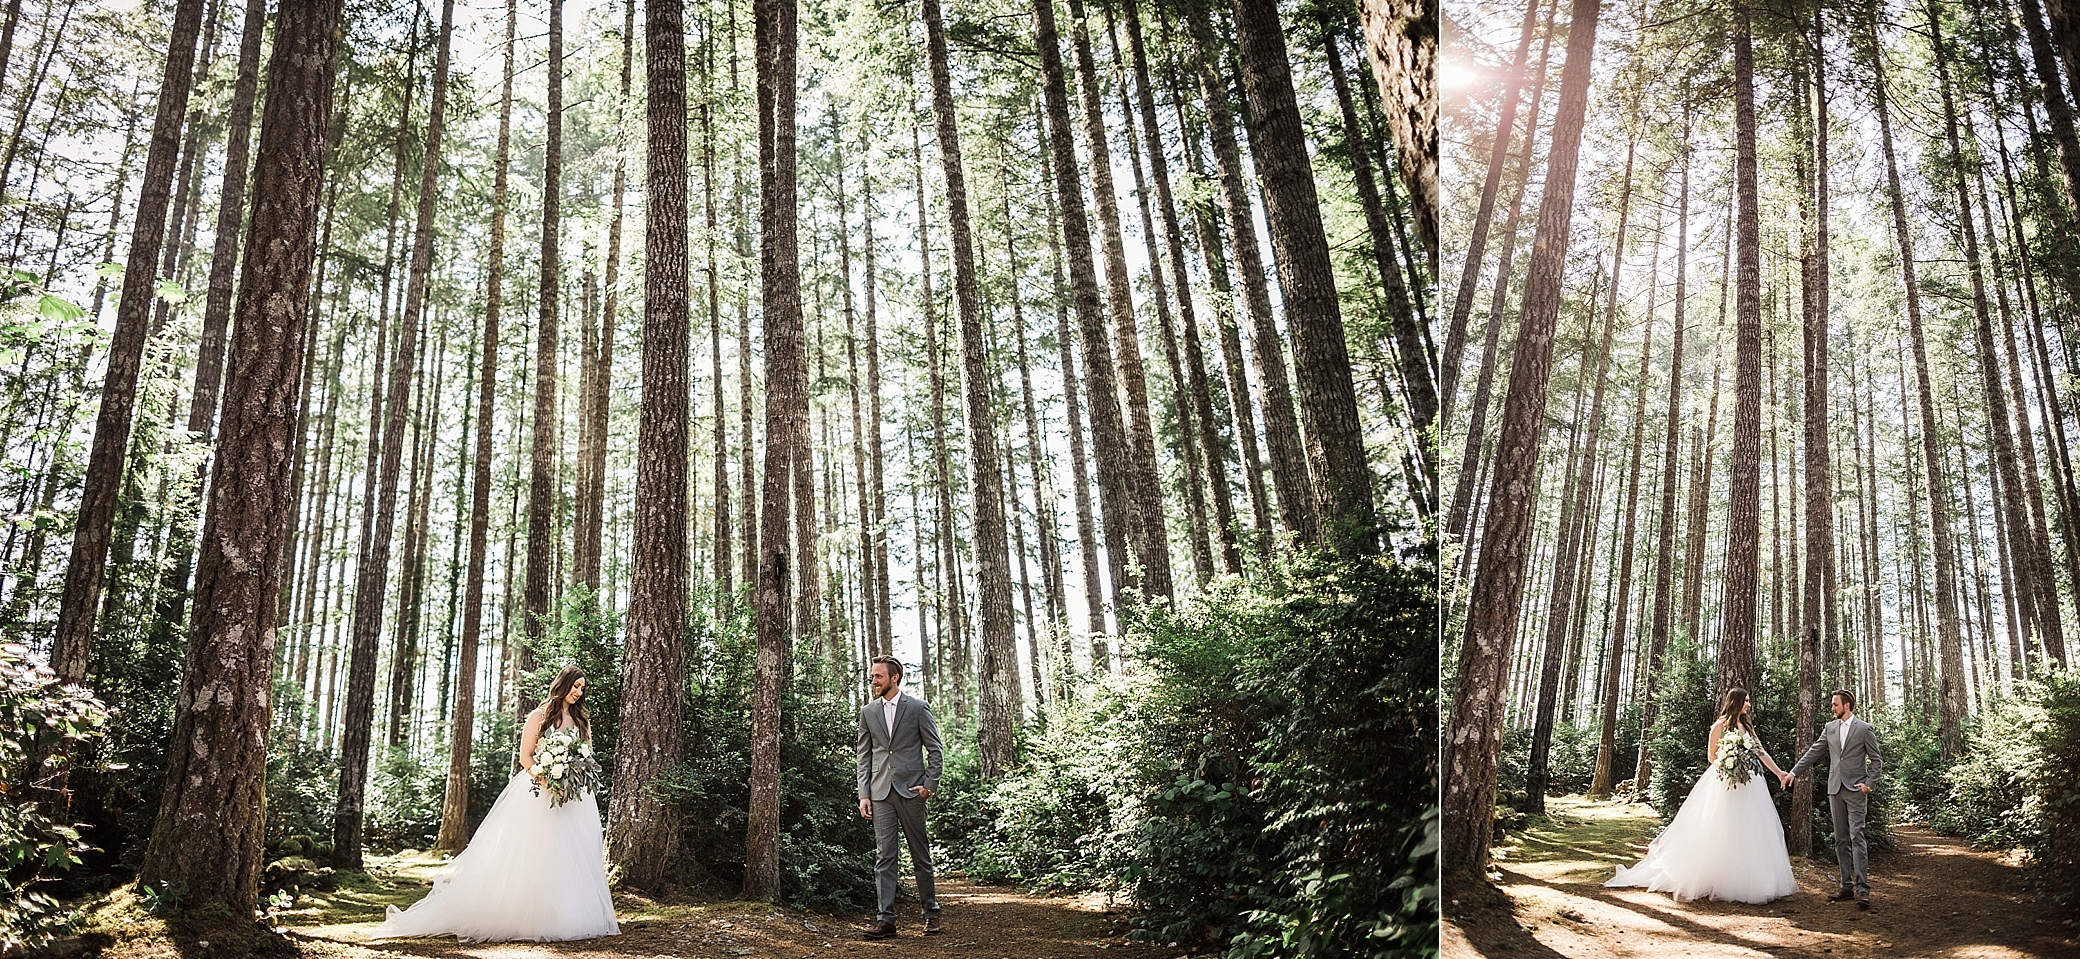 Seattle-Intimate-Backyard-Wedding-Photographer_0022.jpg